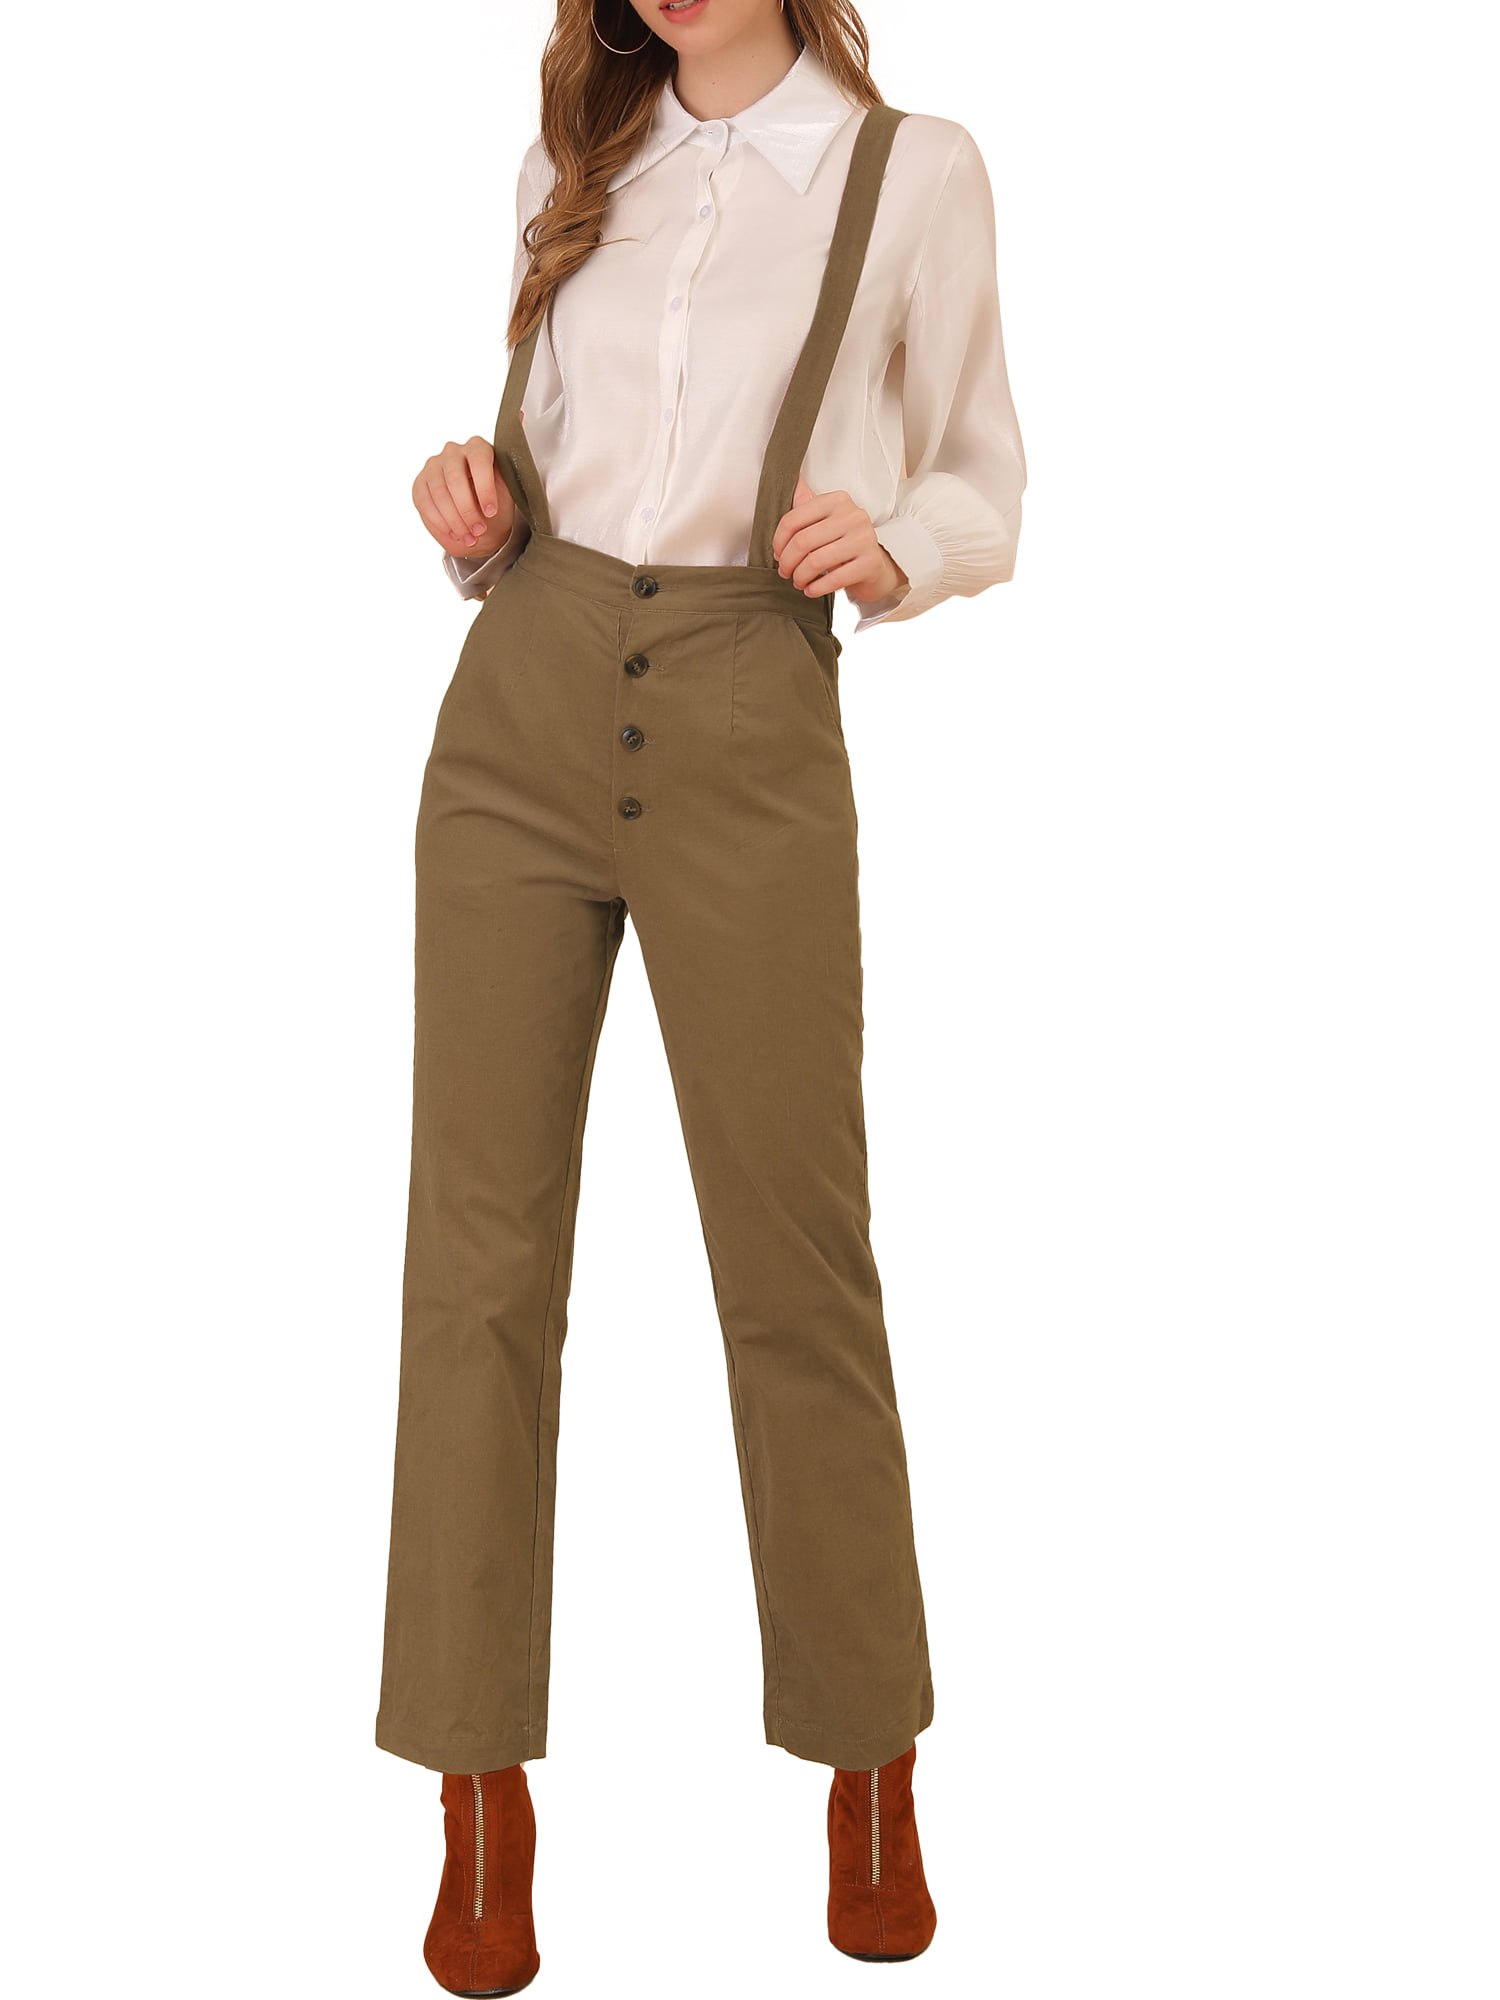 Allegra K Women's Adjustable Strap Belted Button High Waist Pants